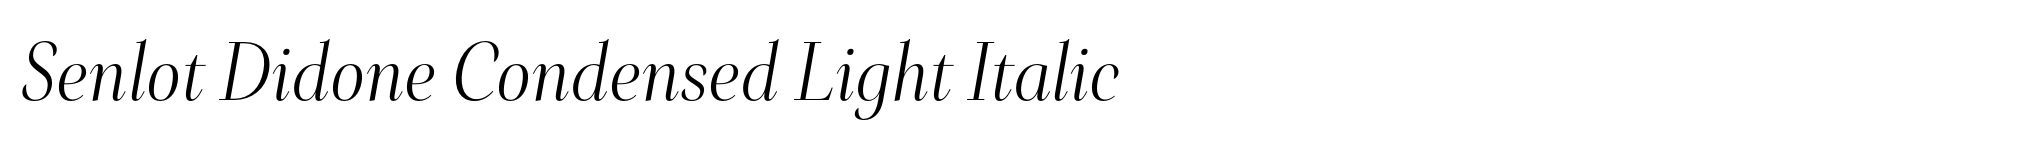 Senlot Didone Condensed Light Italic image